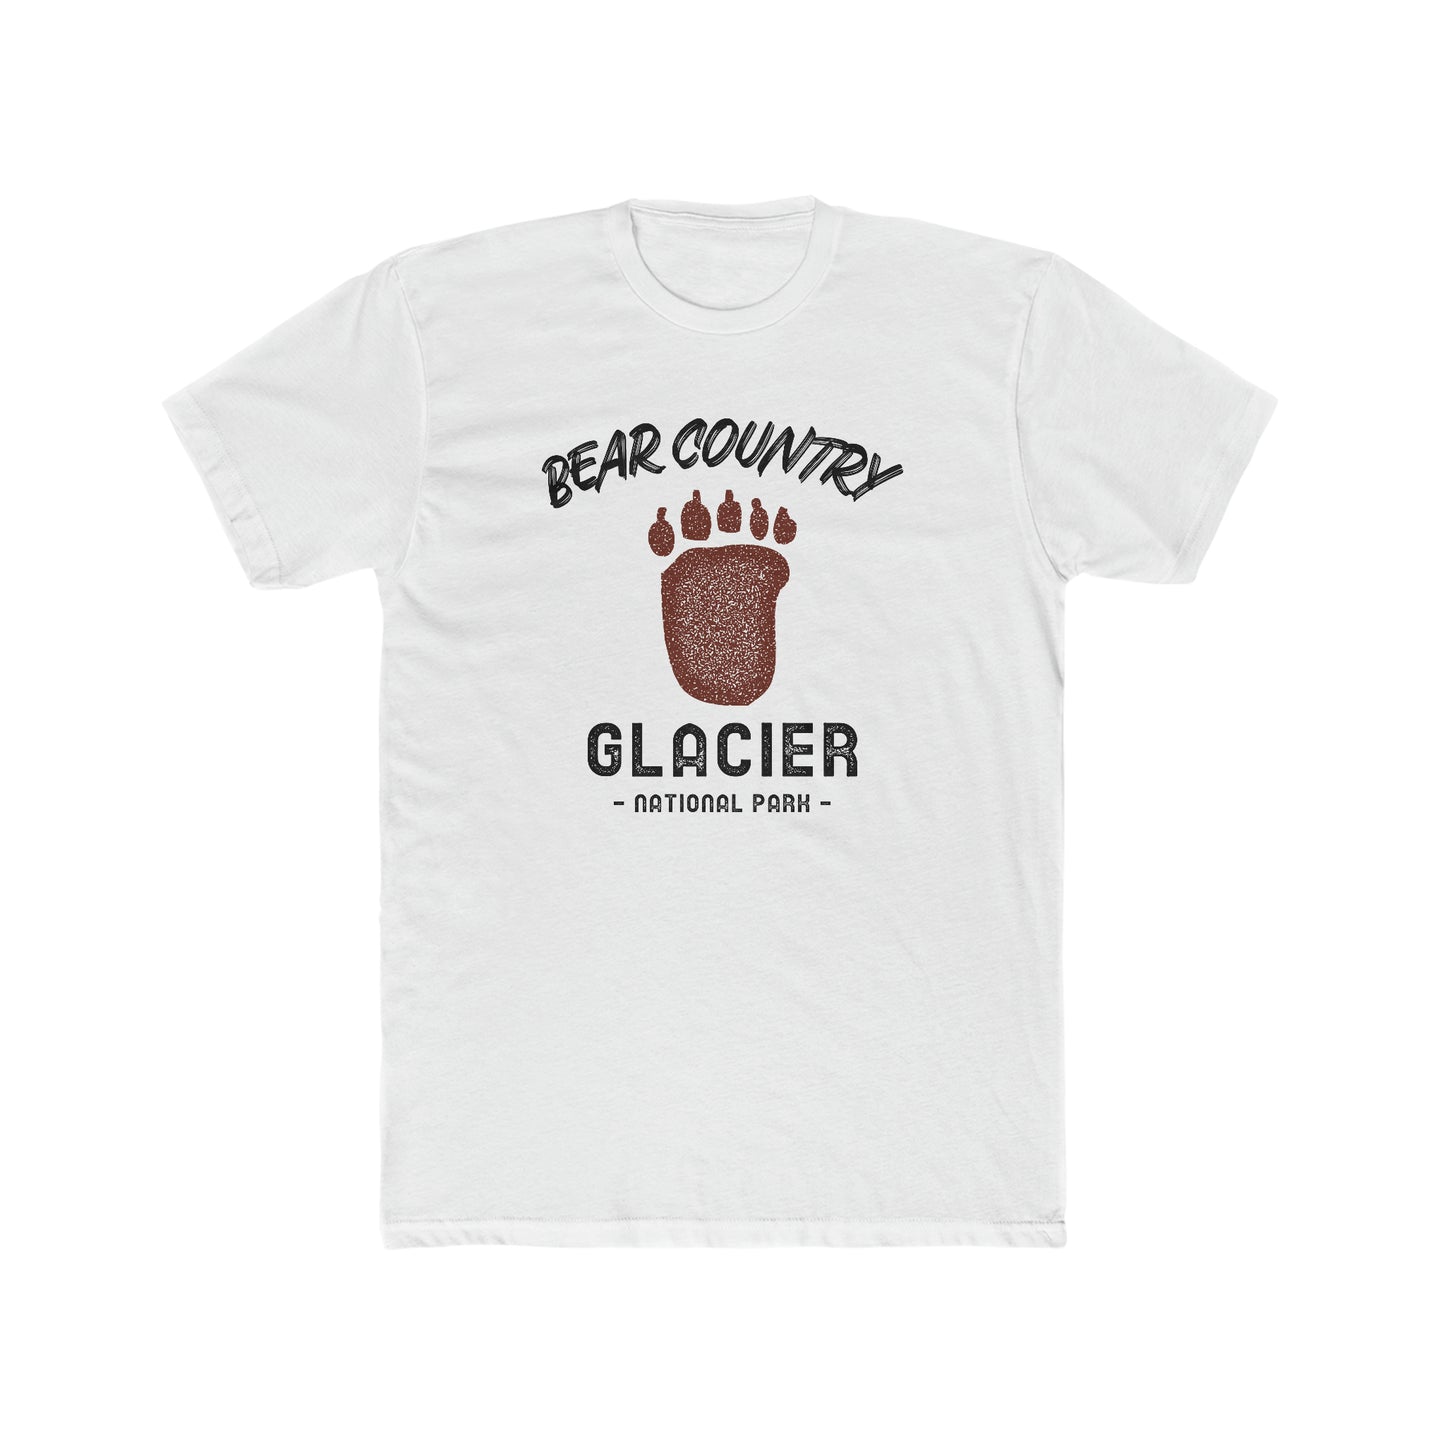 Glacier National Park T-Shirt - Bear Country